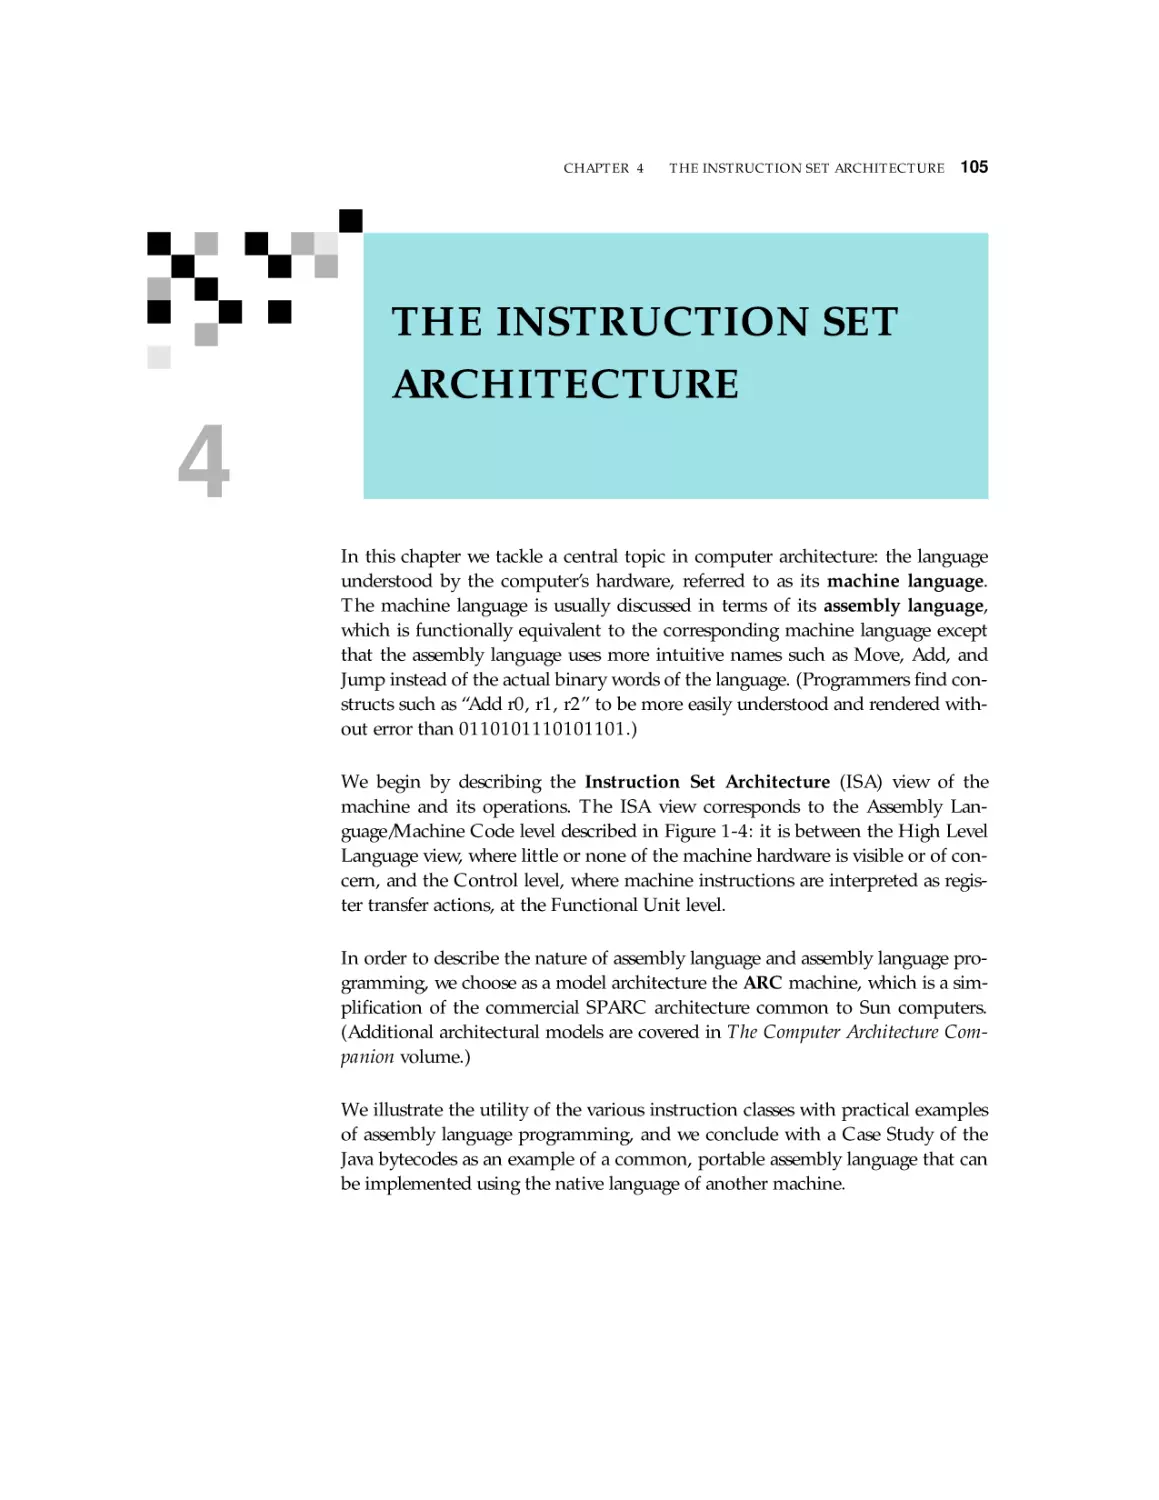 4. THE INSTRUCTION SET ARCHITECTURE